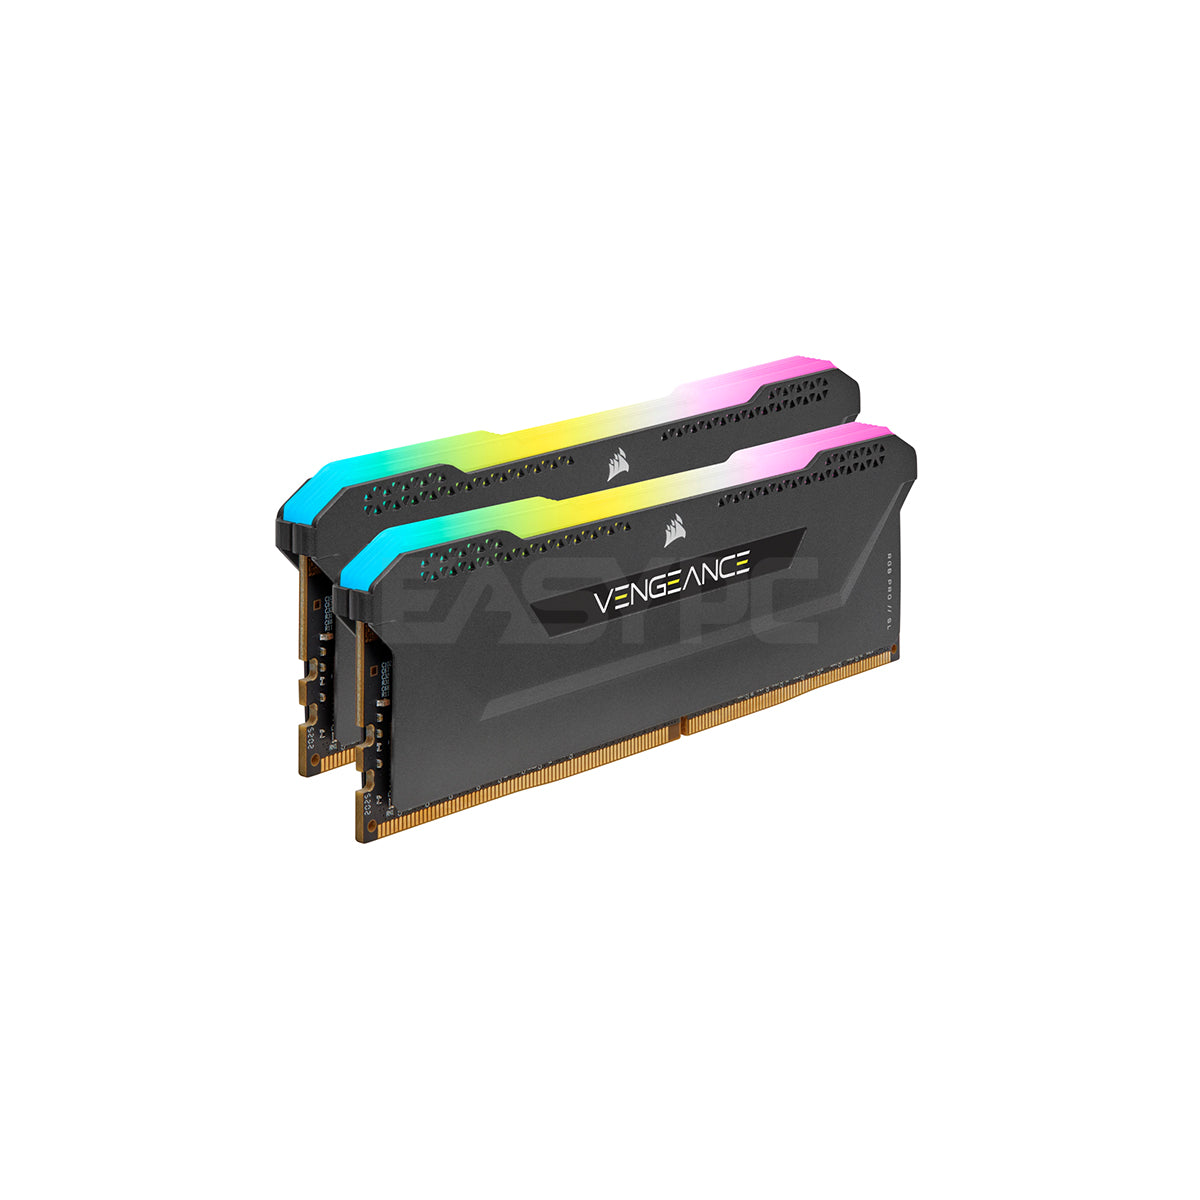 16gb 3200mhz SL Vengeance Memory Pro Ddr4 – 2x8 Corsair EasyPC RGB Black